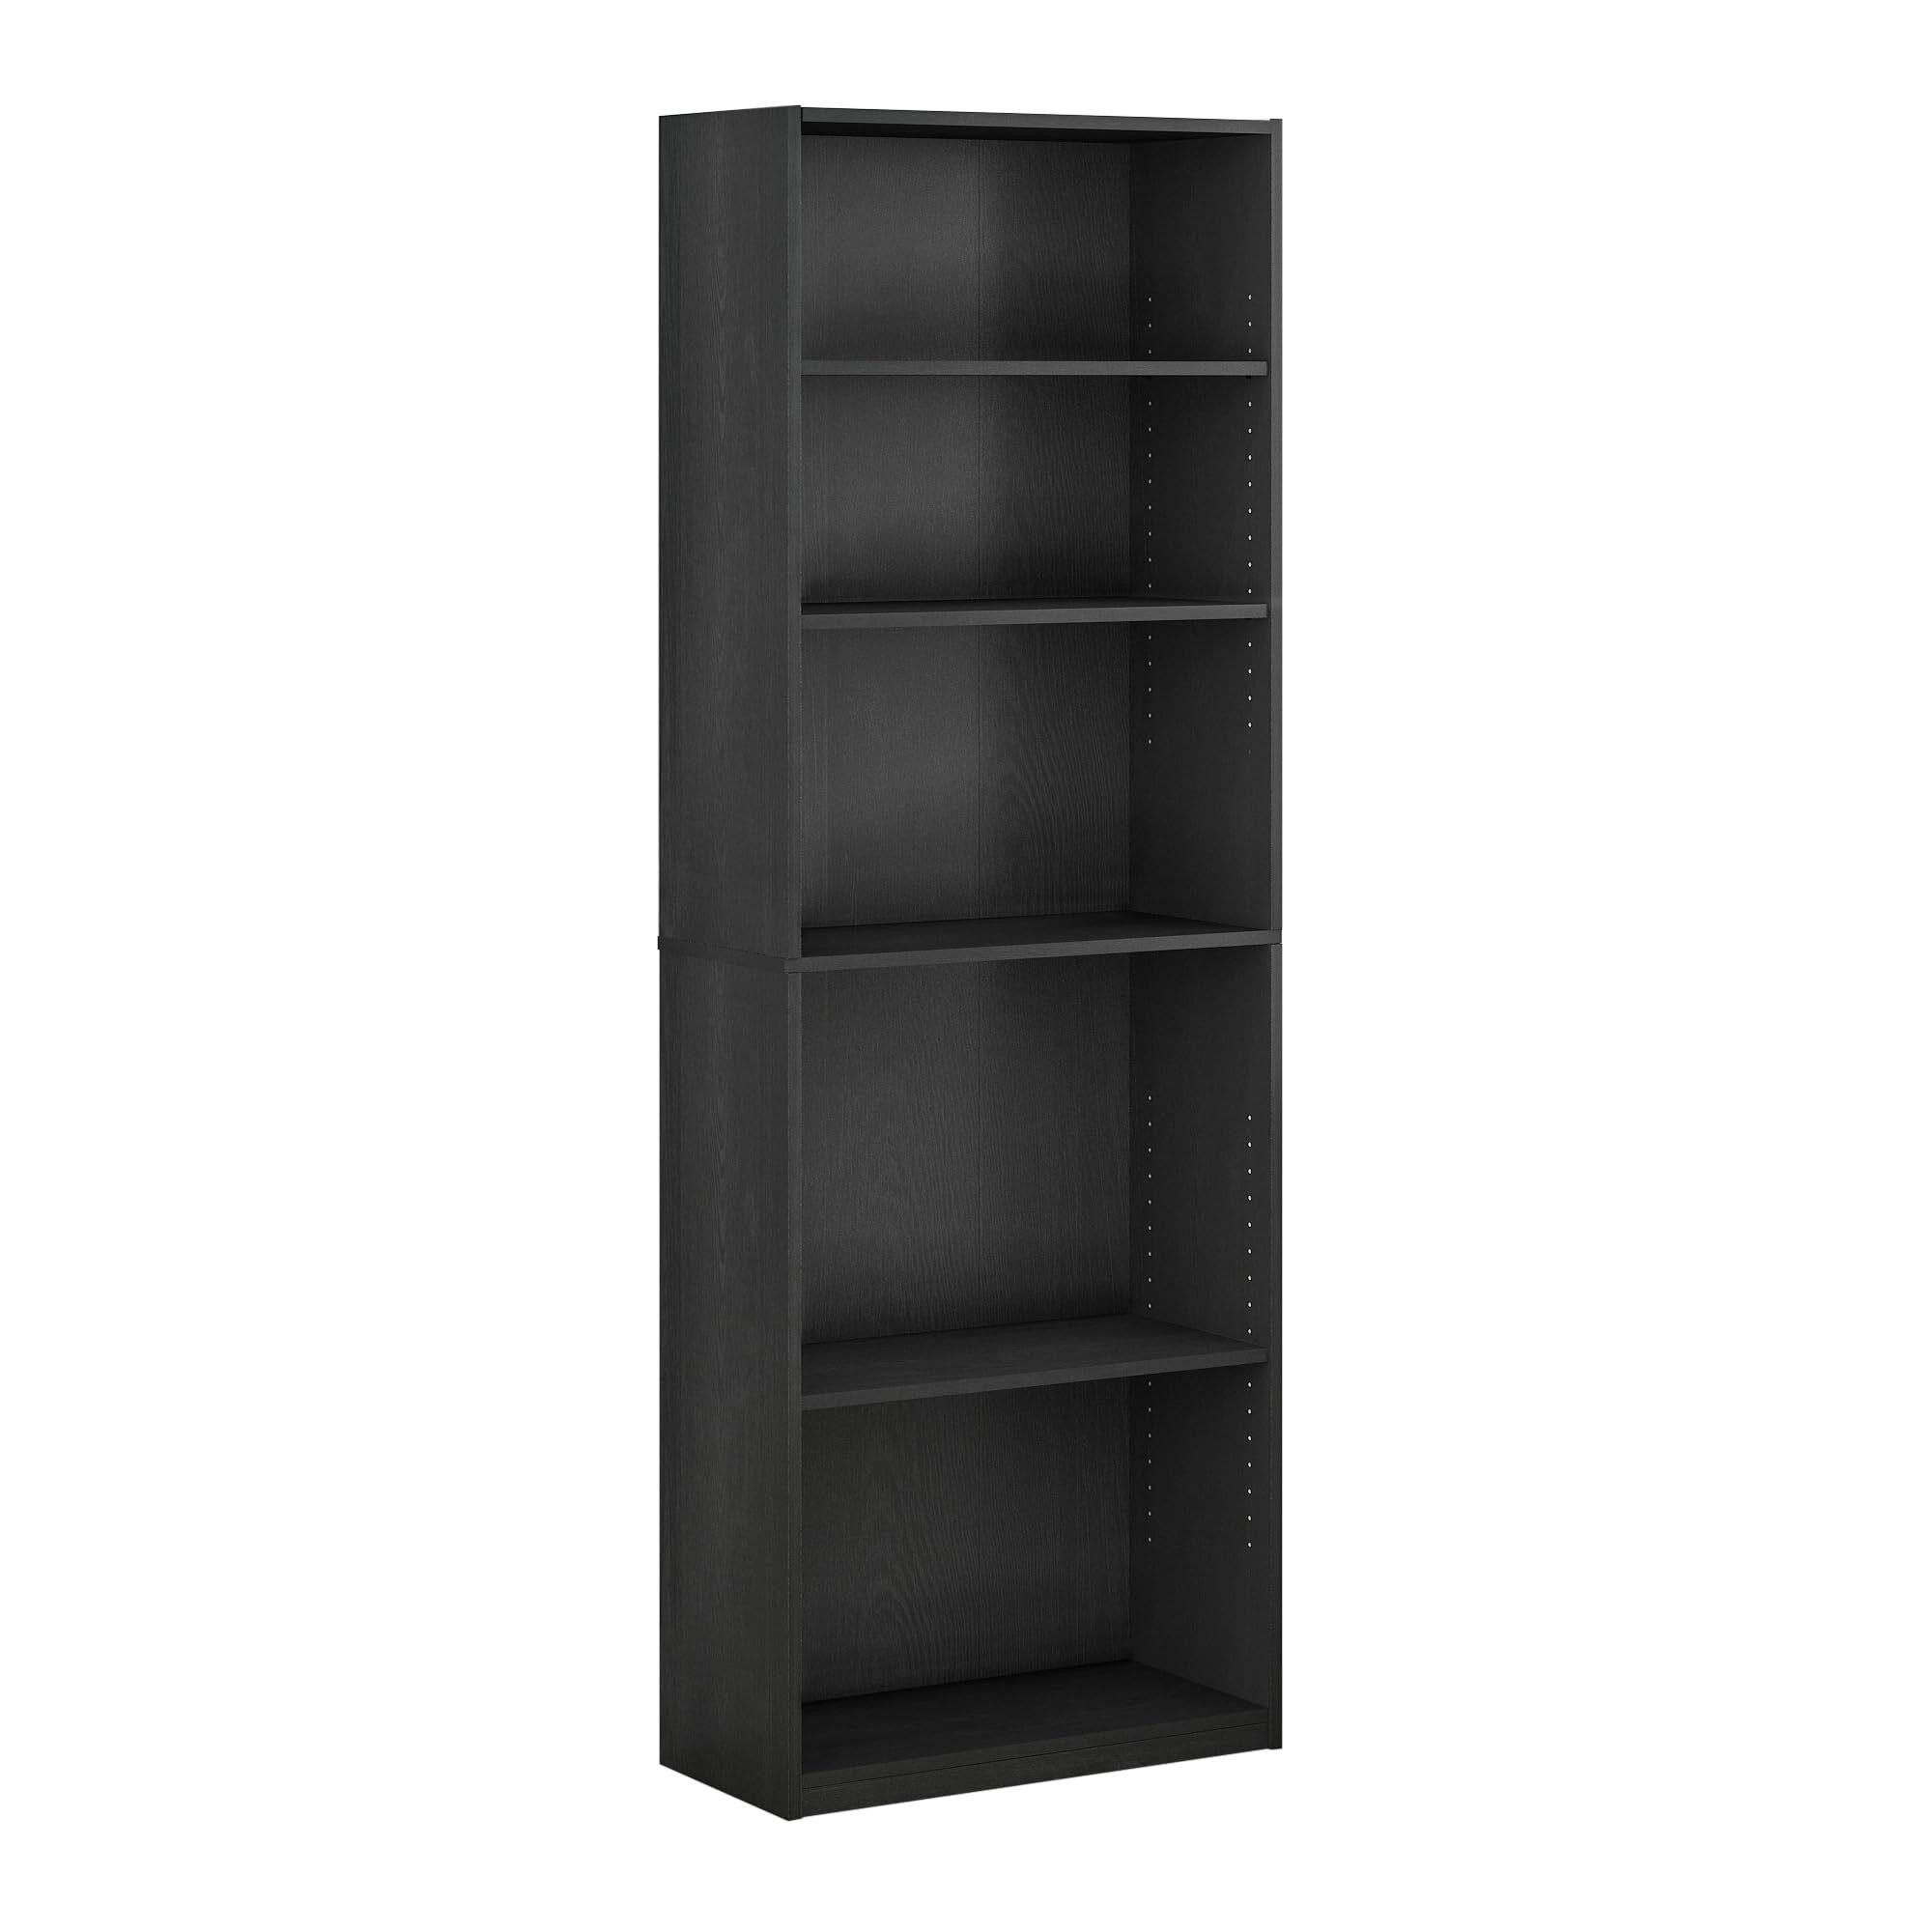 FURINNO JAYA Simply Home 5-Shelf Bookcase, 5-Tier,